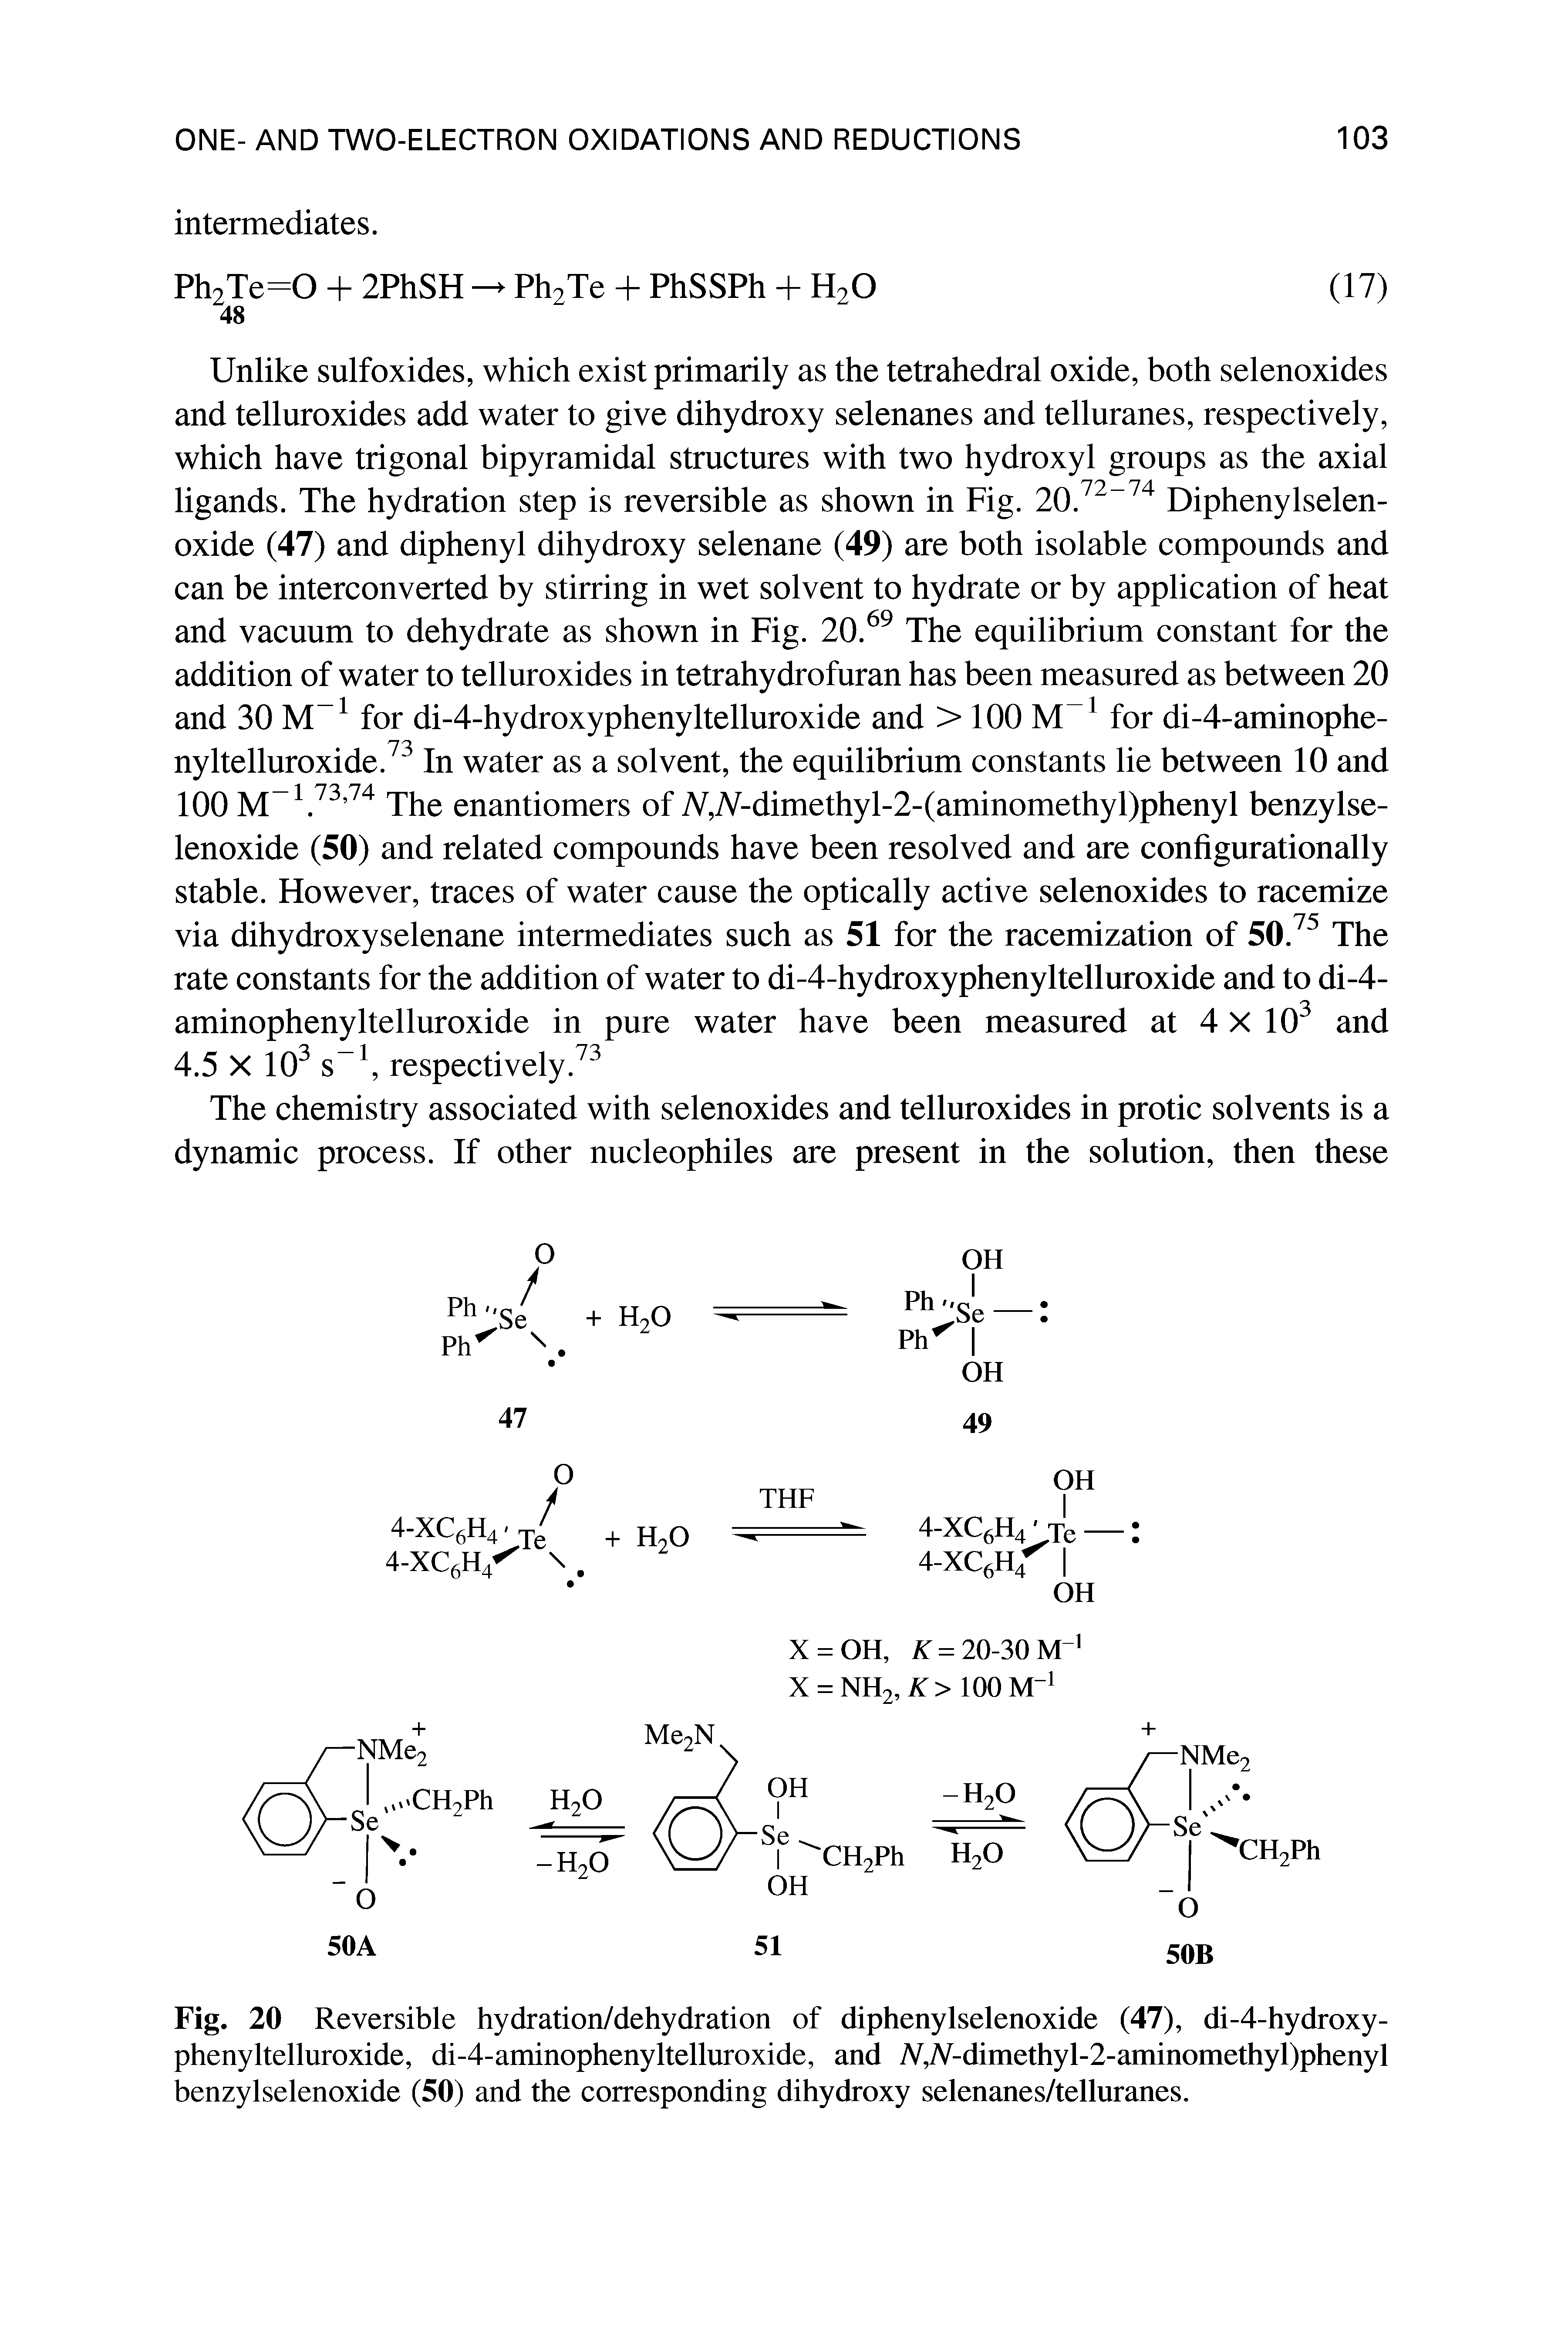 Fig. 20 Reversible hydration/dehydration of diphenylselenoxide (47), di-4-hydroxy-phenyltelluroxide, di-4-aminophenyltelluroxide, and A, A -dimethyl-2-aminomethyl)phenyl benzylselenoxide (50) and the corresponding dihydroxy selenanes/telluranes.